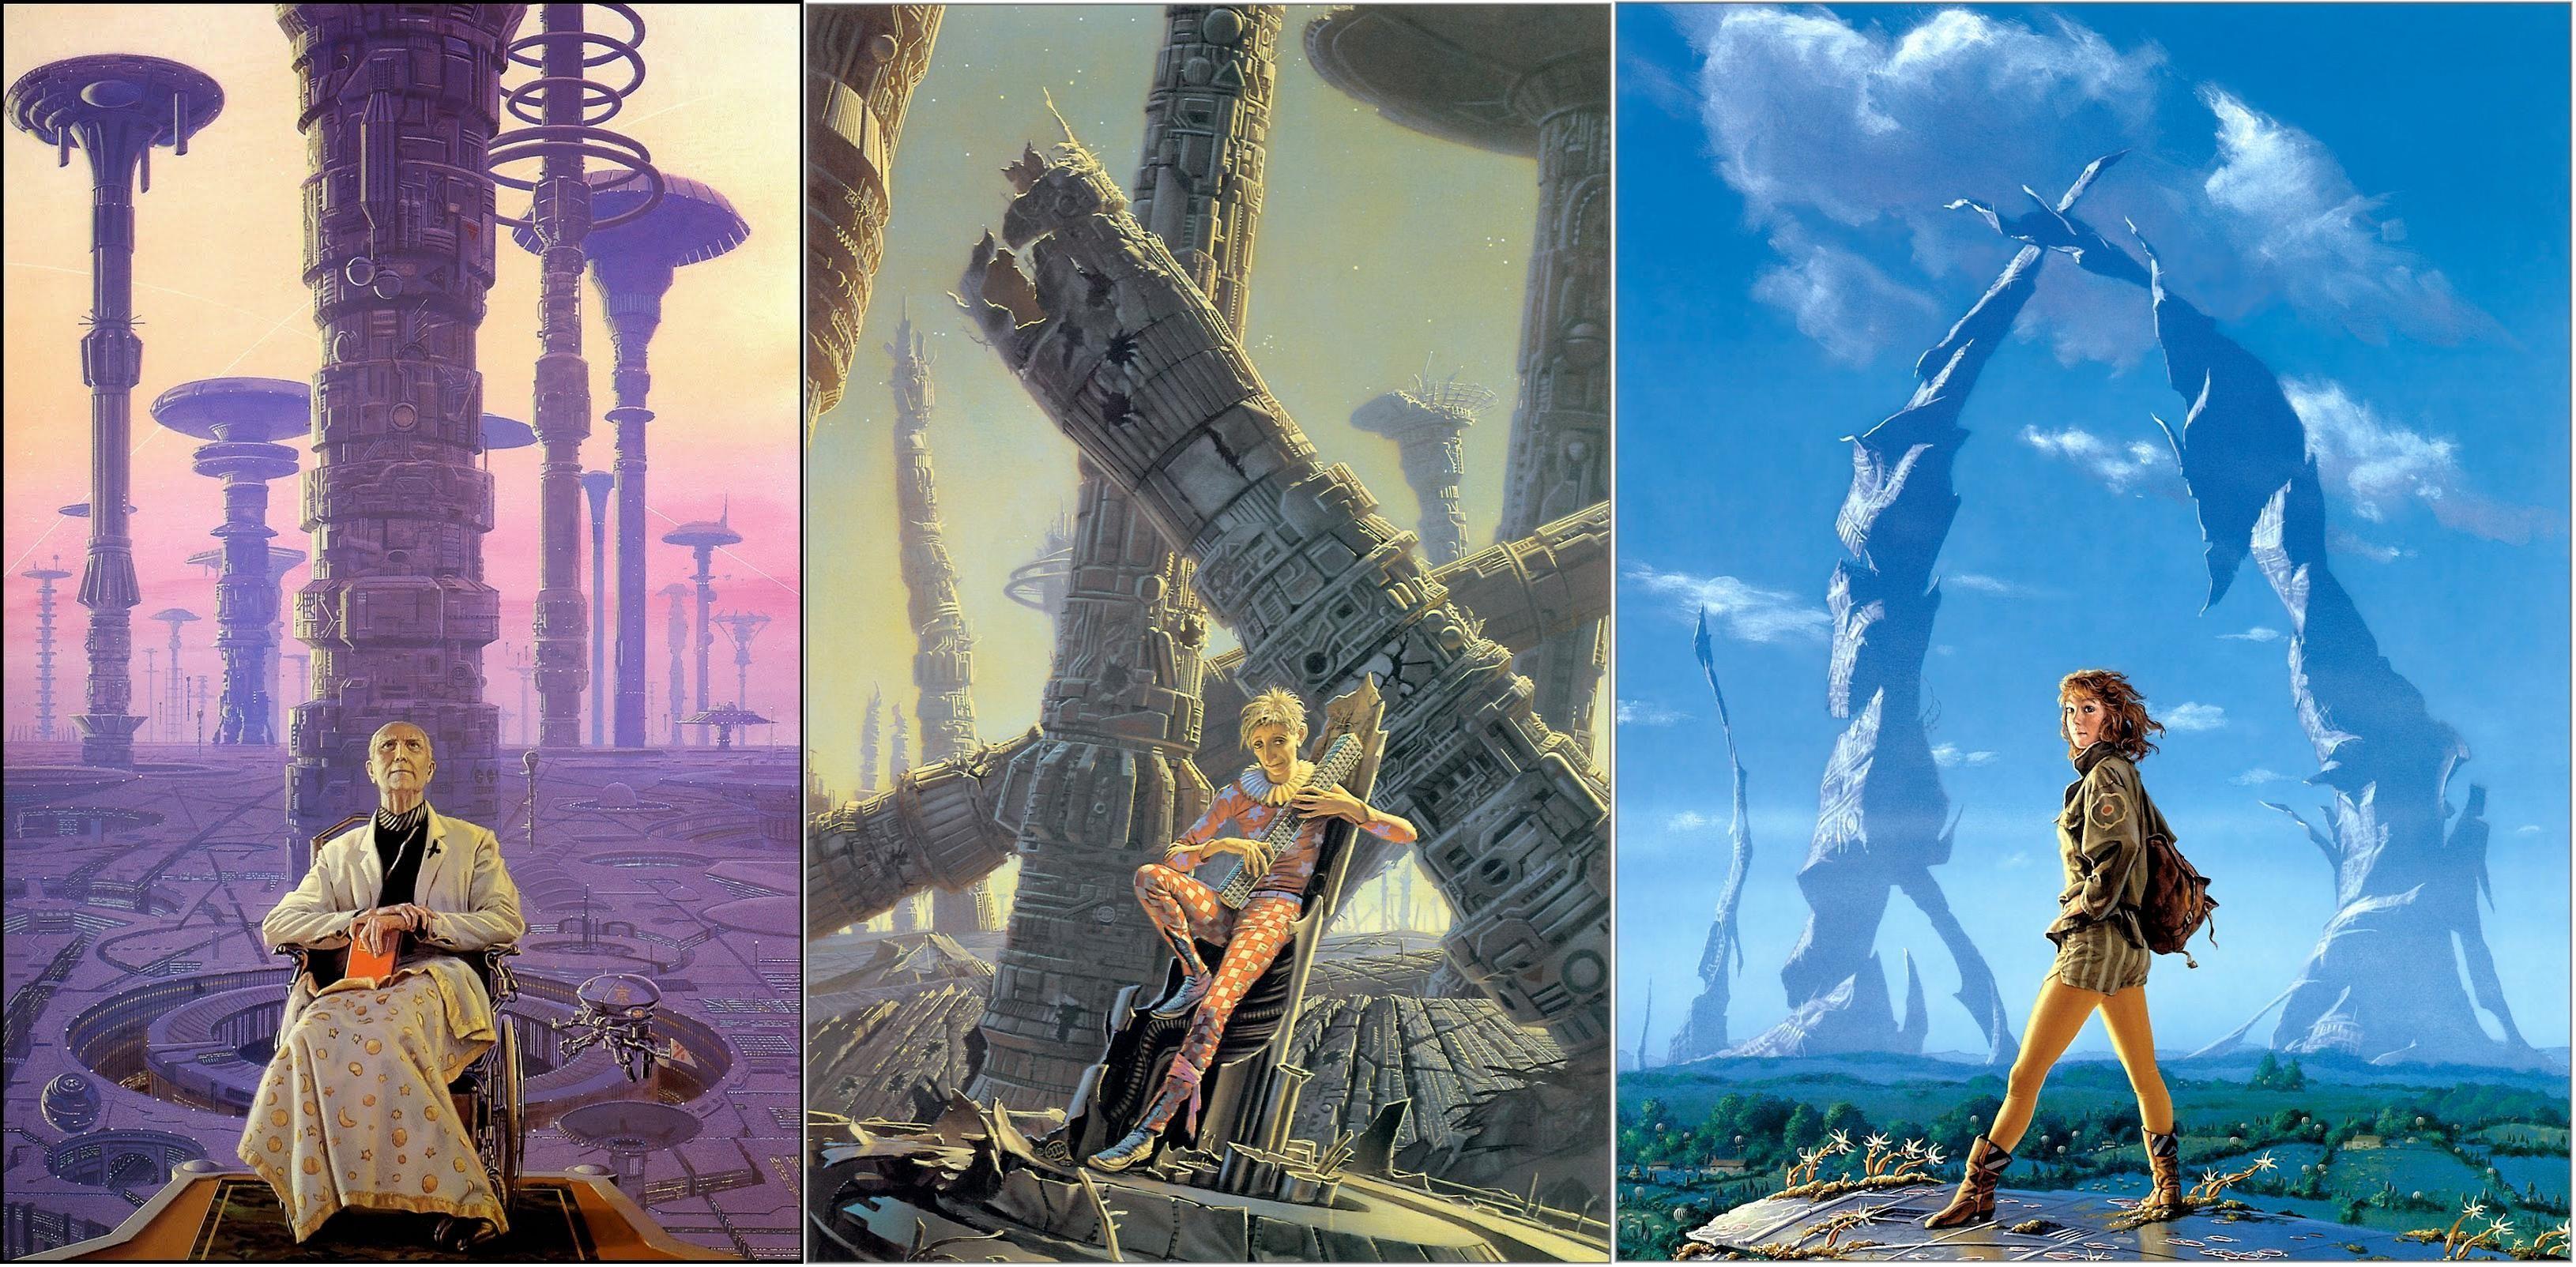 Isaac Asimov Wallpapers - Top Free Isaac Asimov Backgrounds